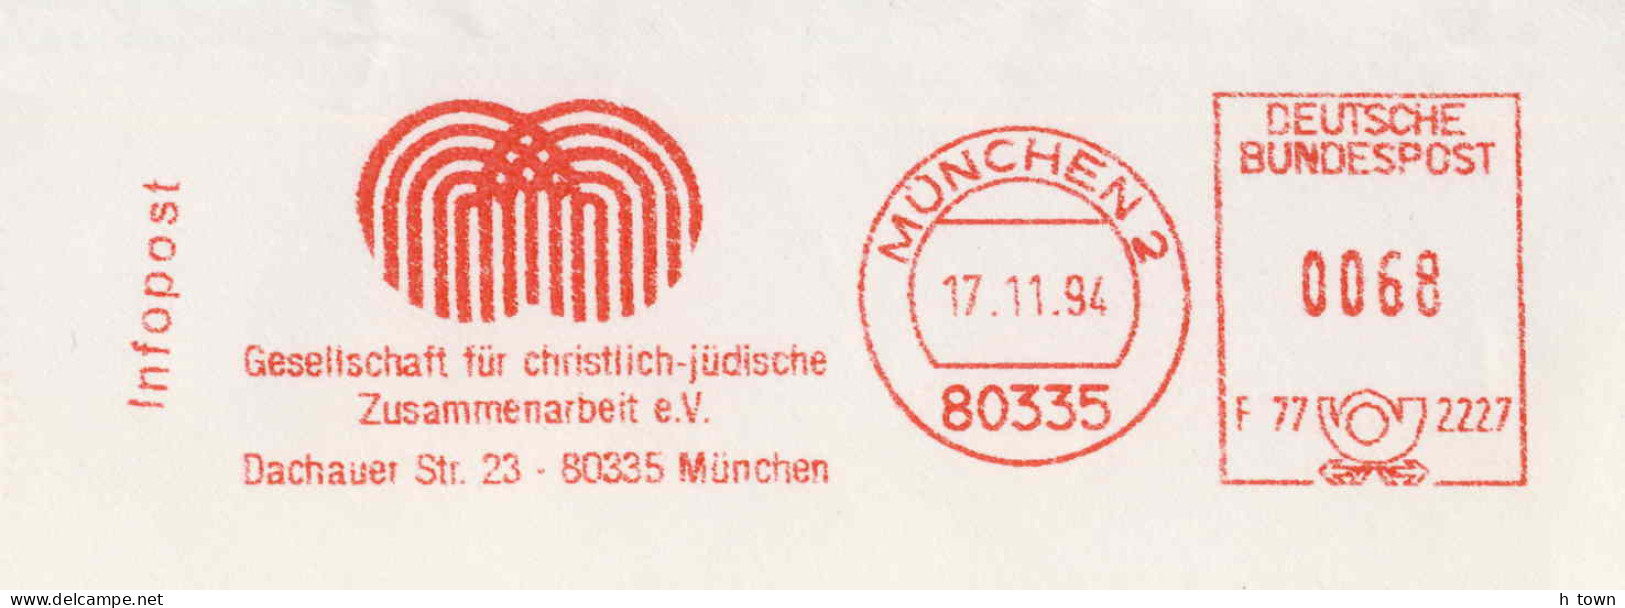 962  Coopération Chrétienne-judaïque: Ema D'Allemagne, 1994. Christian-Jewish Collabortion Munich, Germany  - Guidaismo